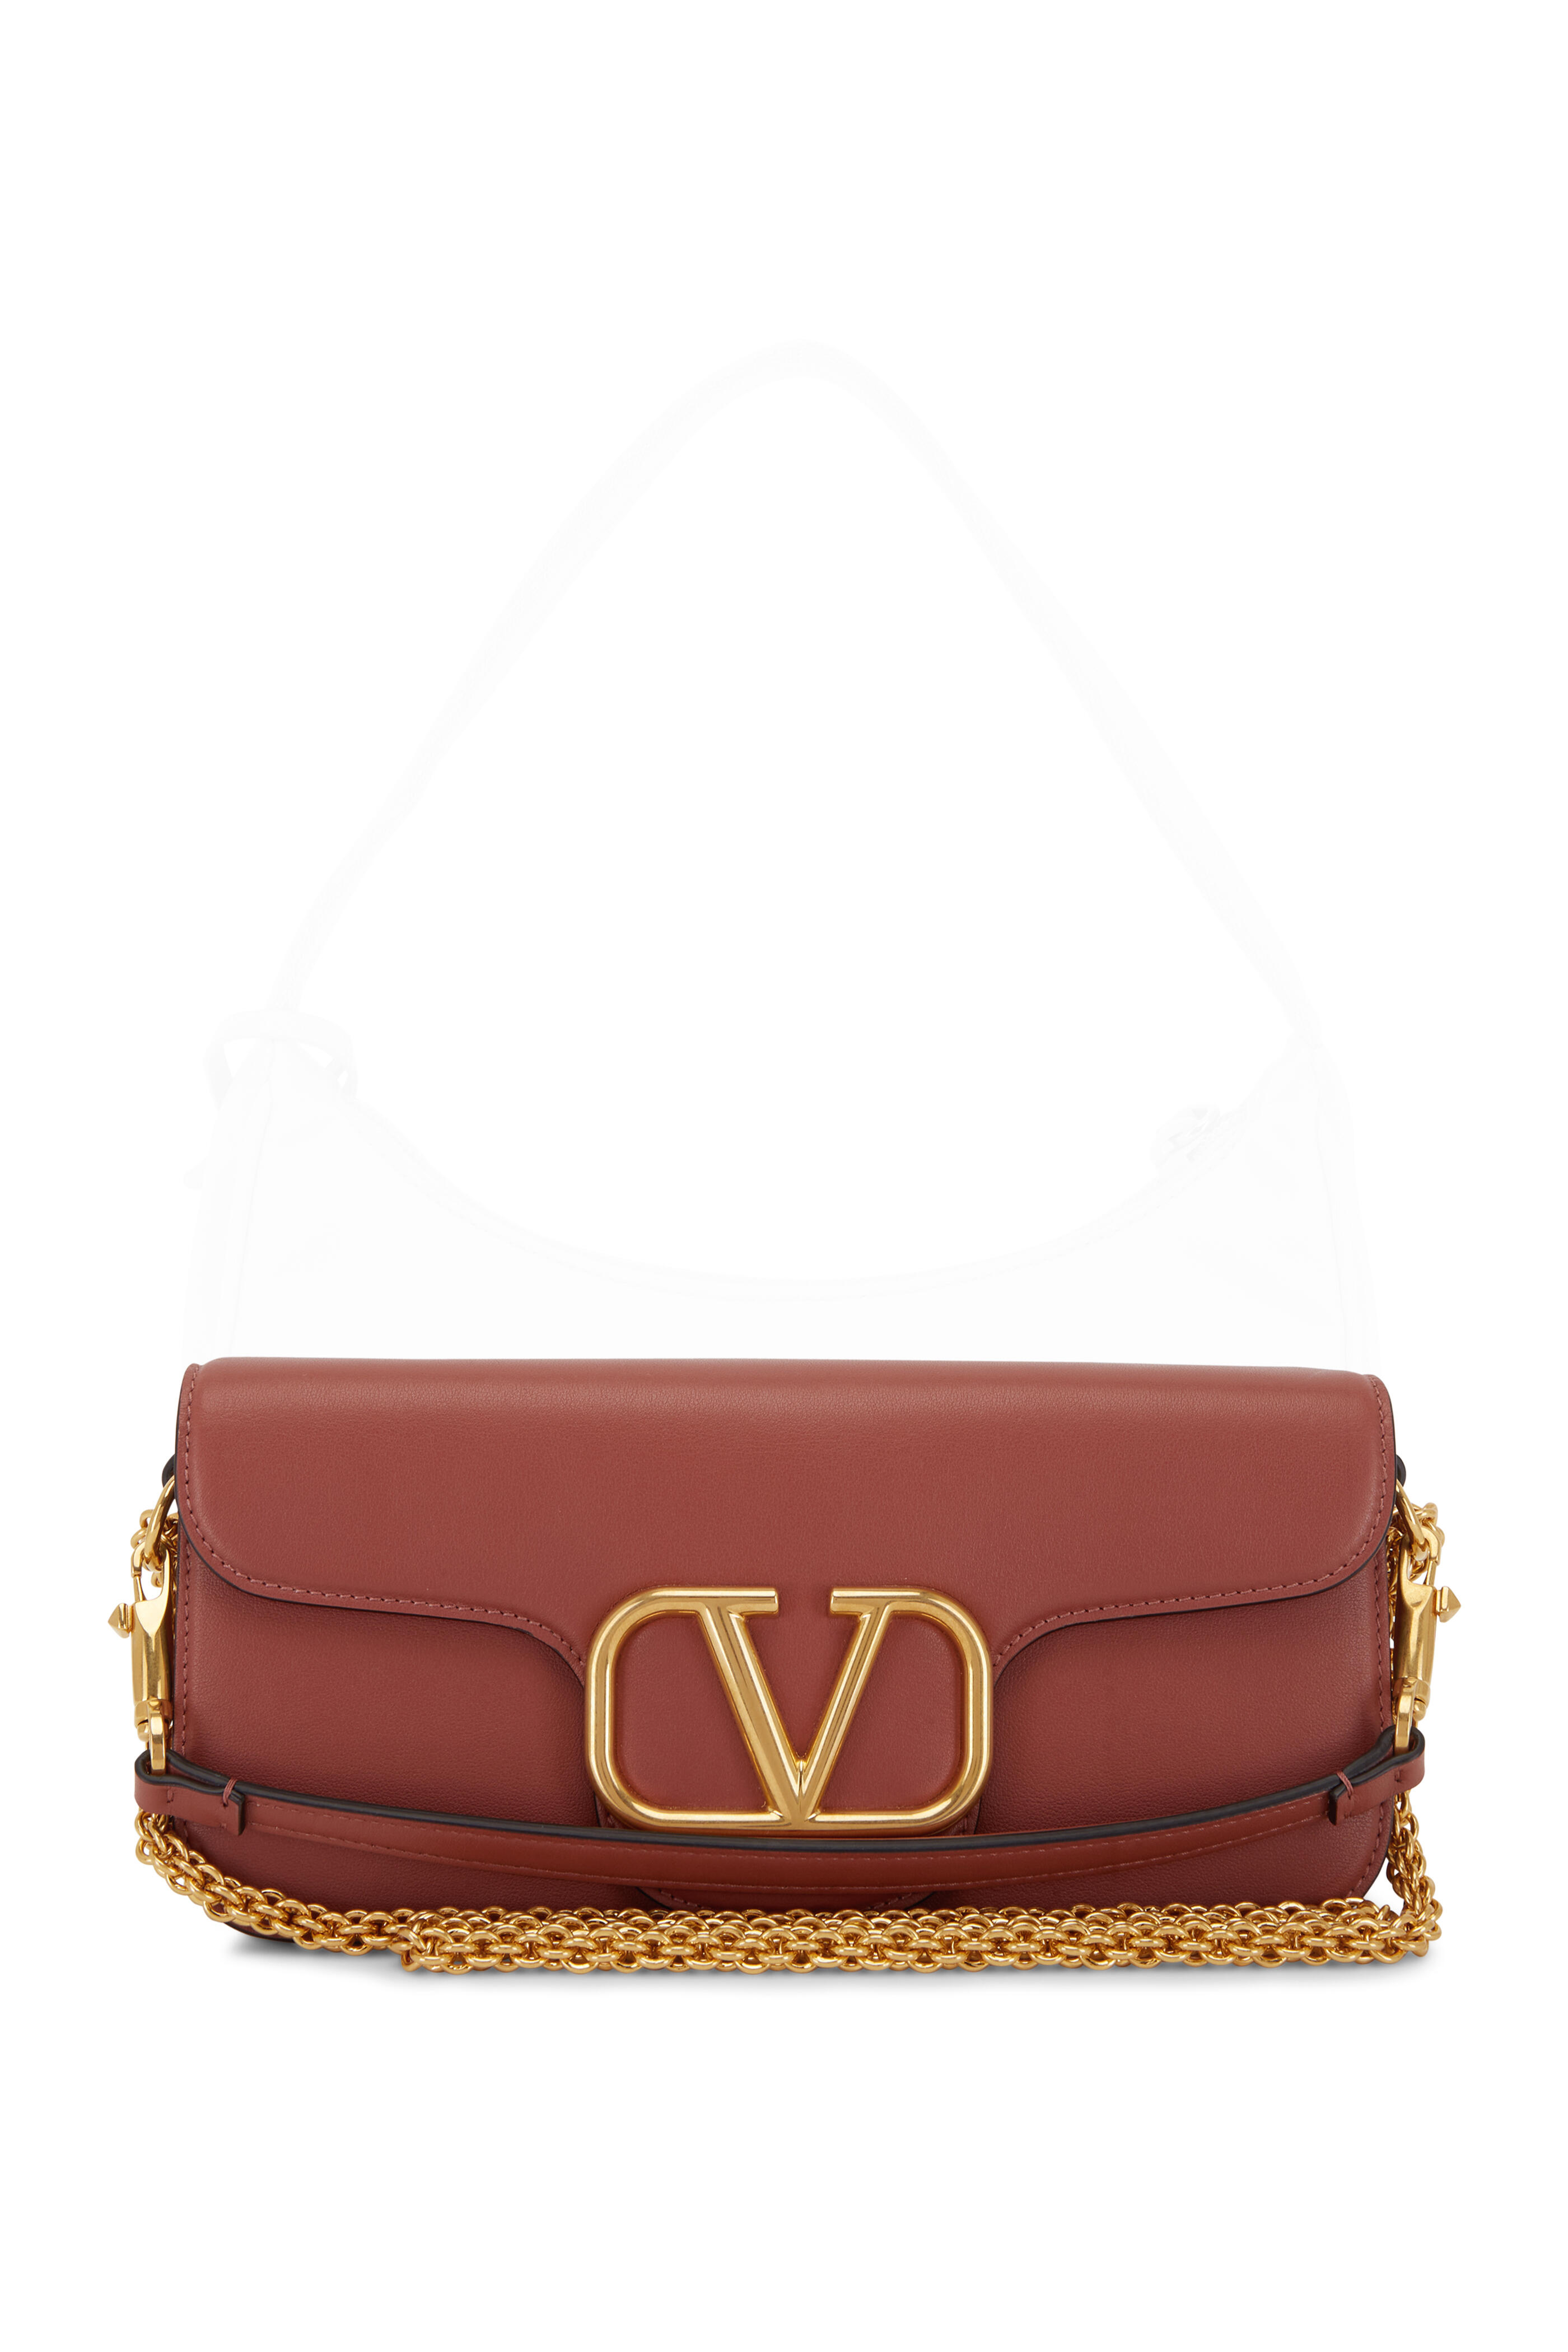 Valentino Garavani V-Logo Shoulder Bag Black